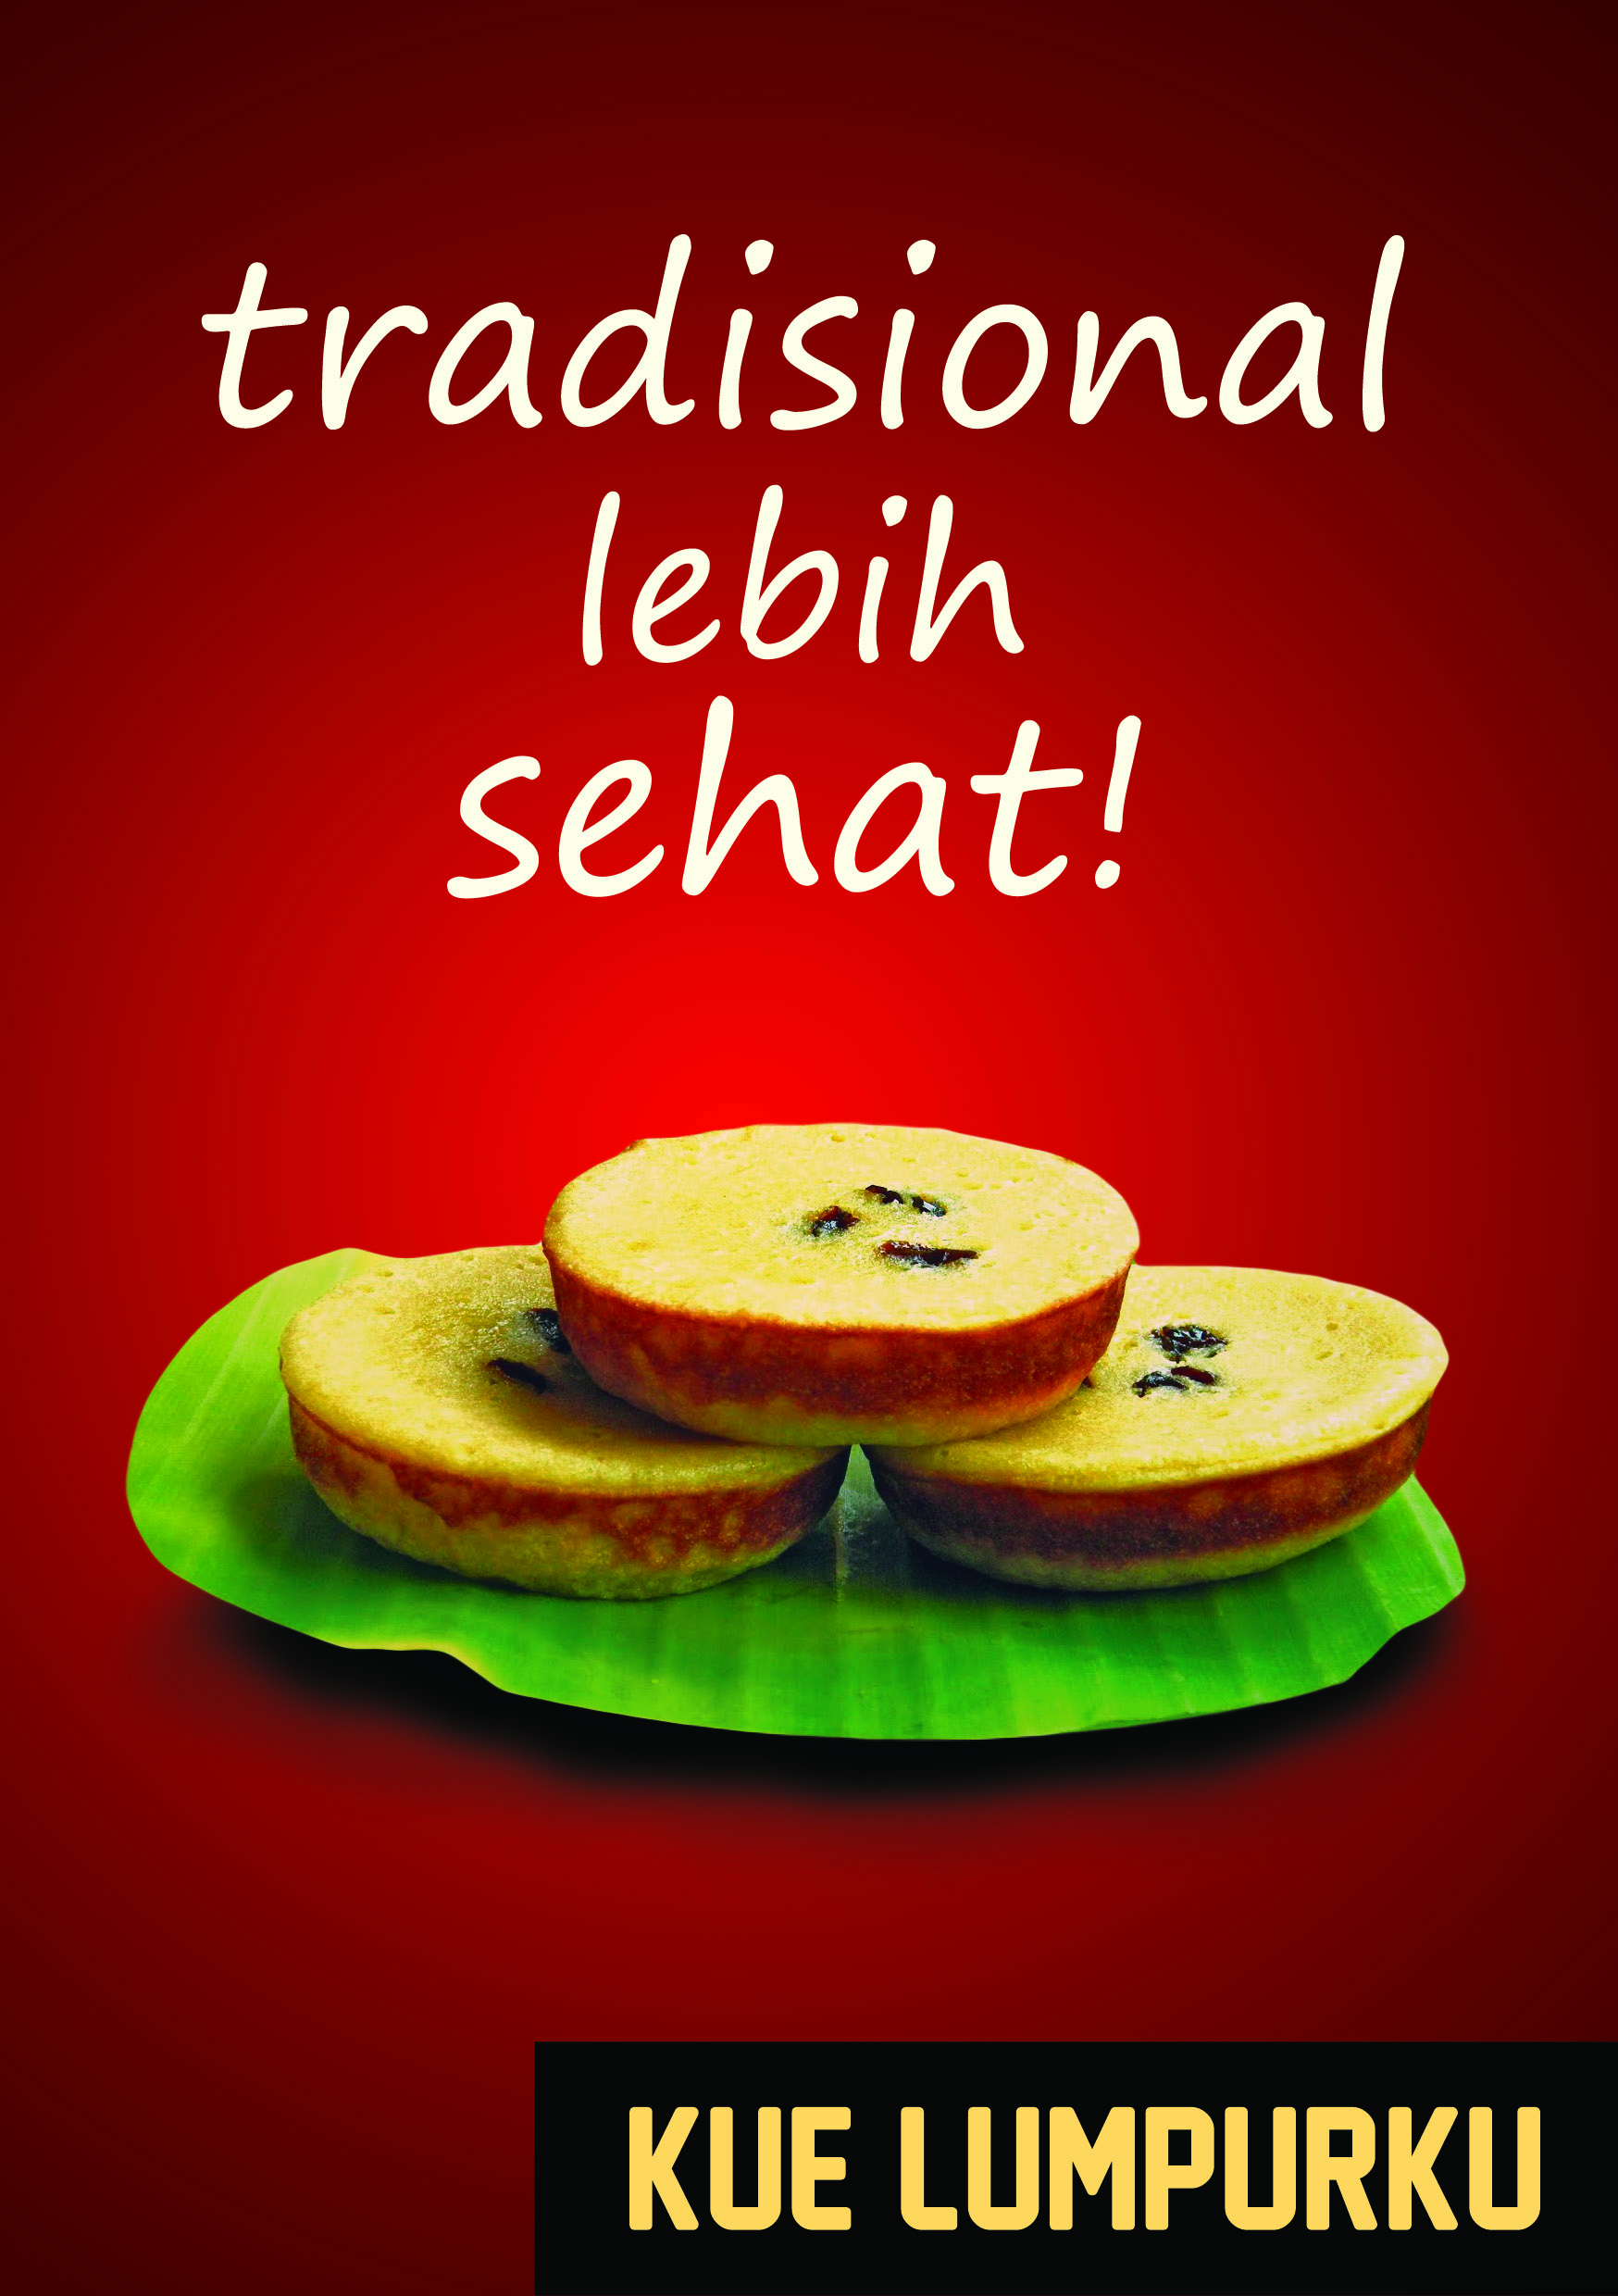 Poster Makanan Tradisional Inuk World